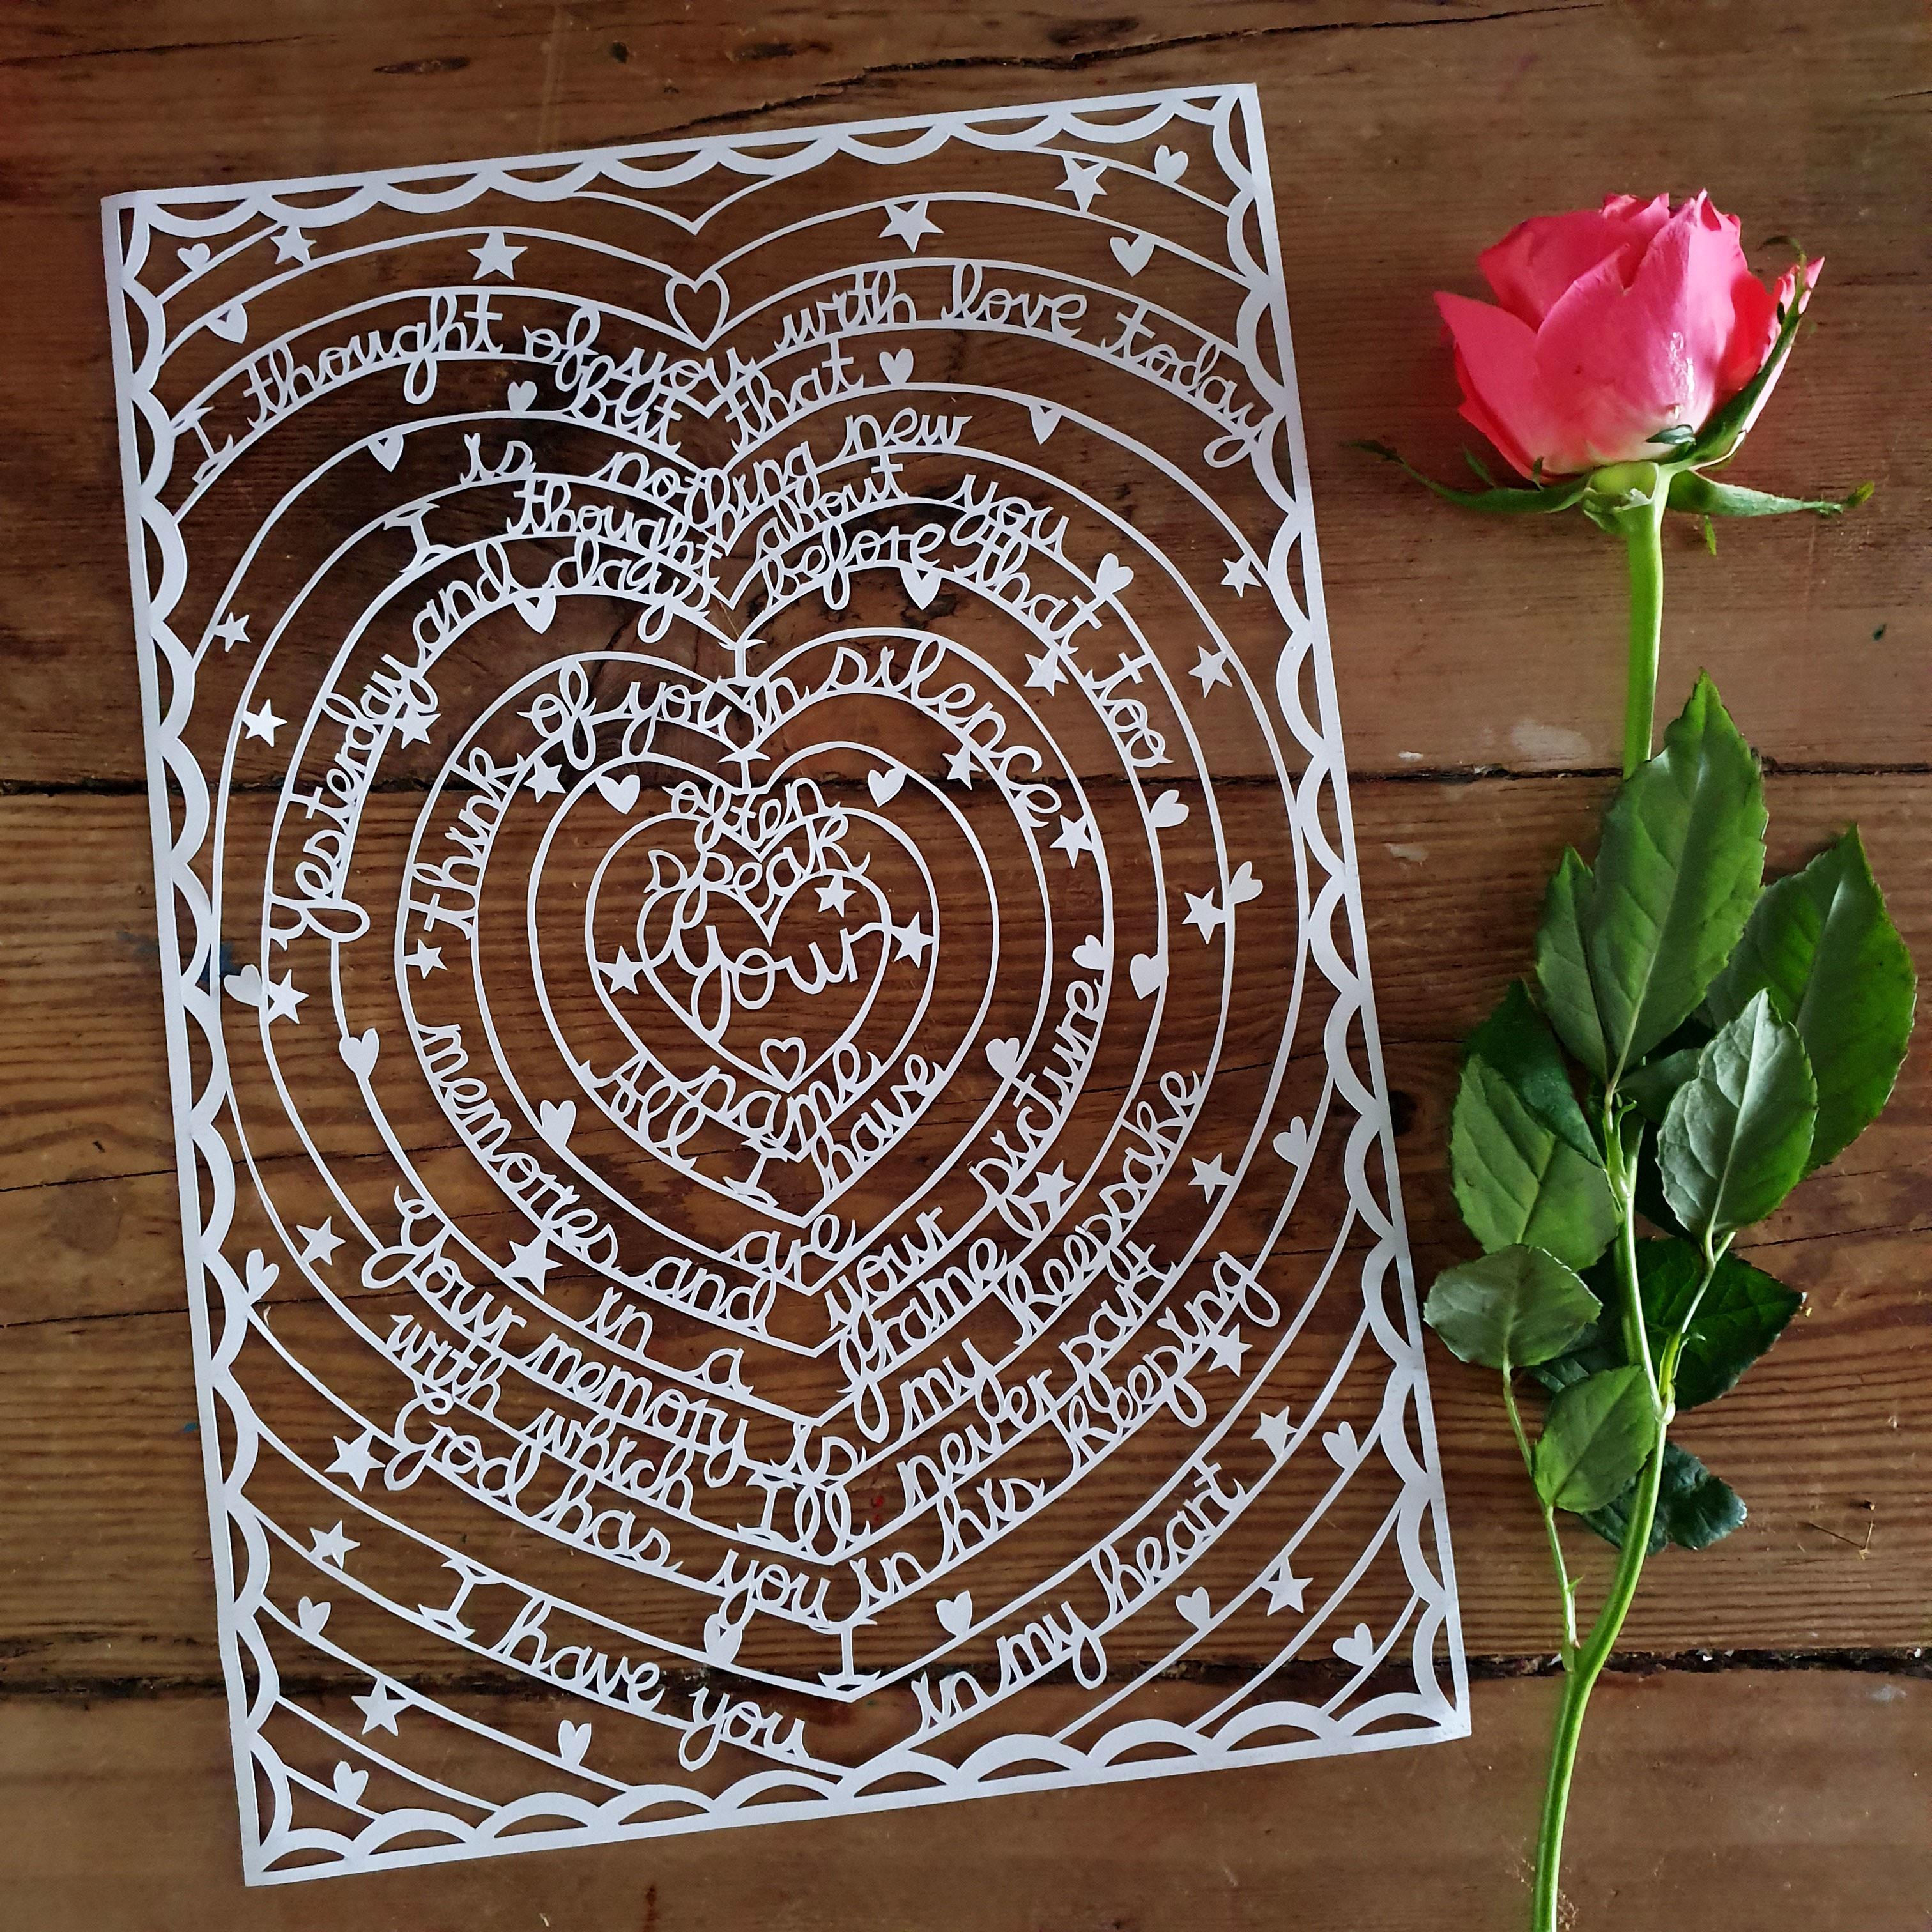 hand cut, hand drawn paper cut of song lyrics or wedding reading